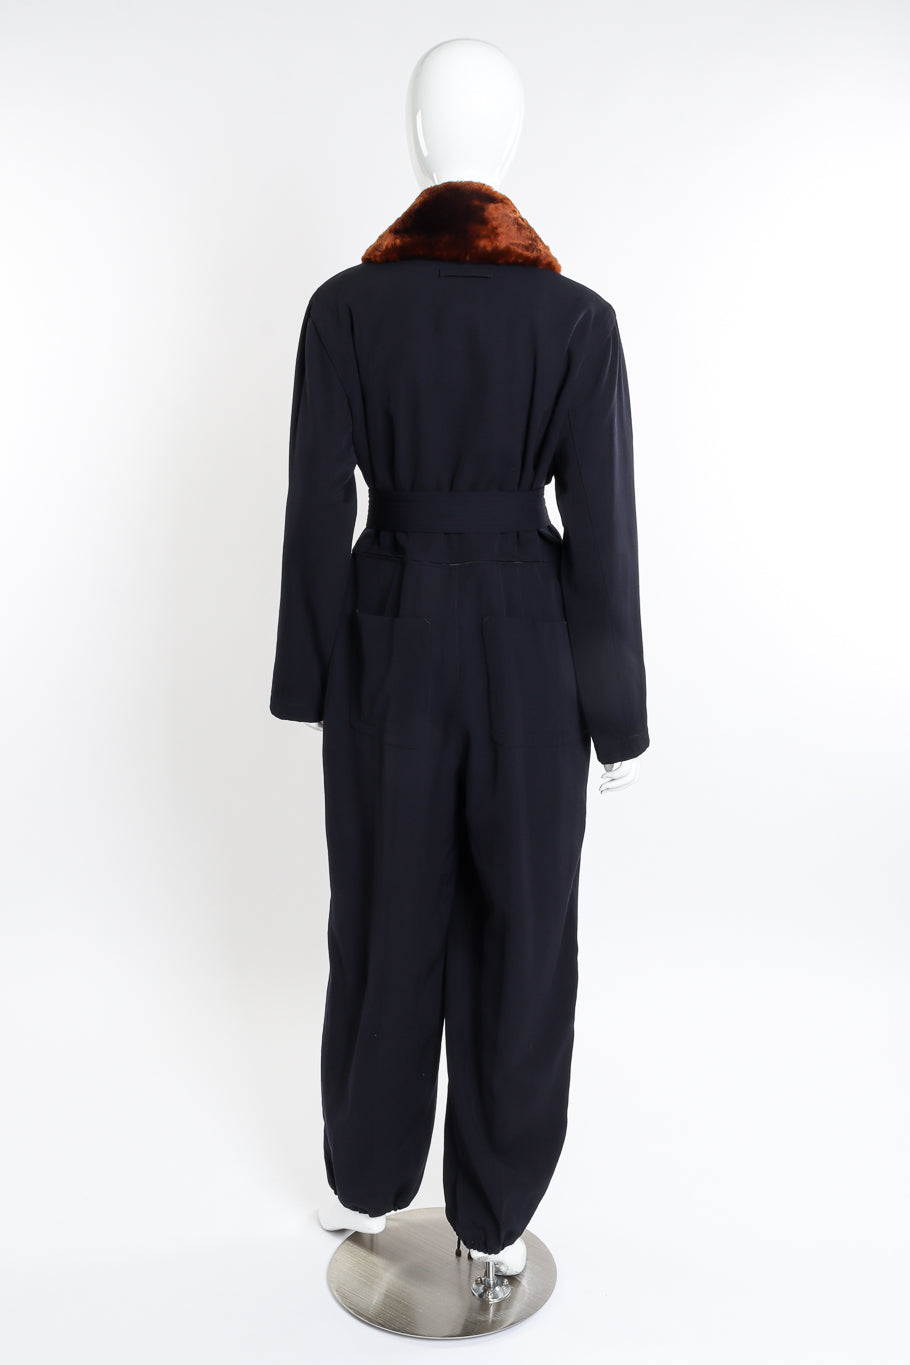 Jean Paul Gaultier Femme Fur Trim Flight Suit back on mannequin @recessla